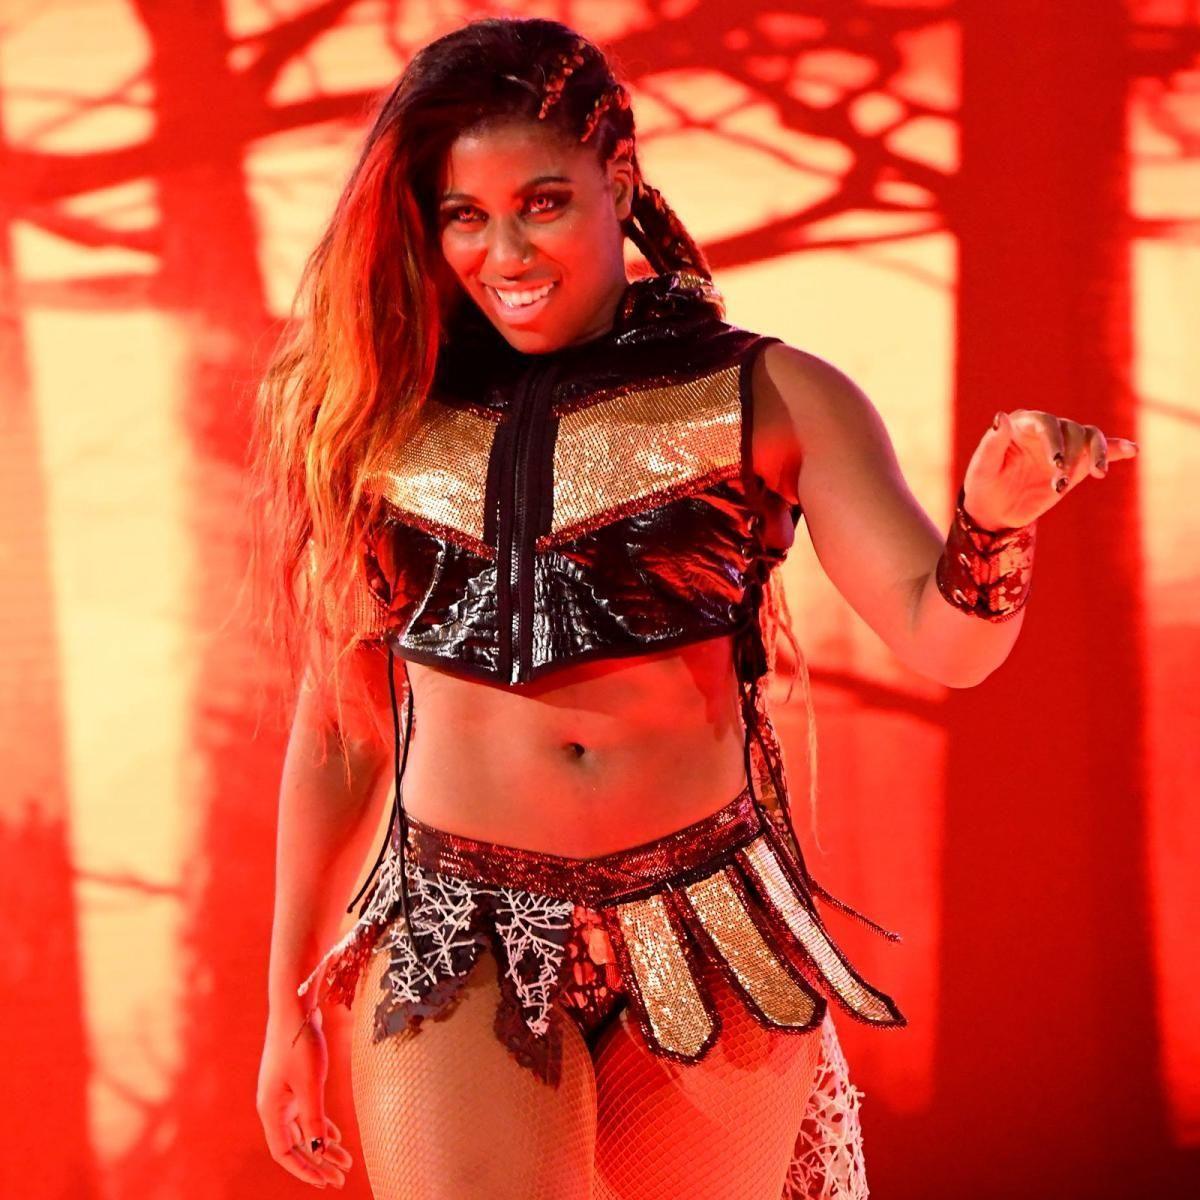 Photos: The War Goddess makes Raw singles debut in slugfest